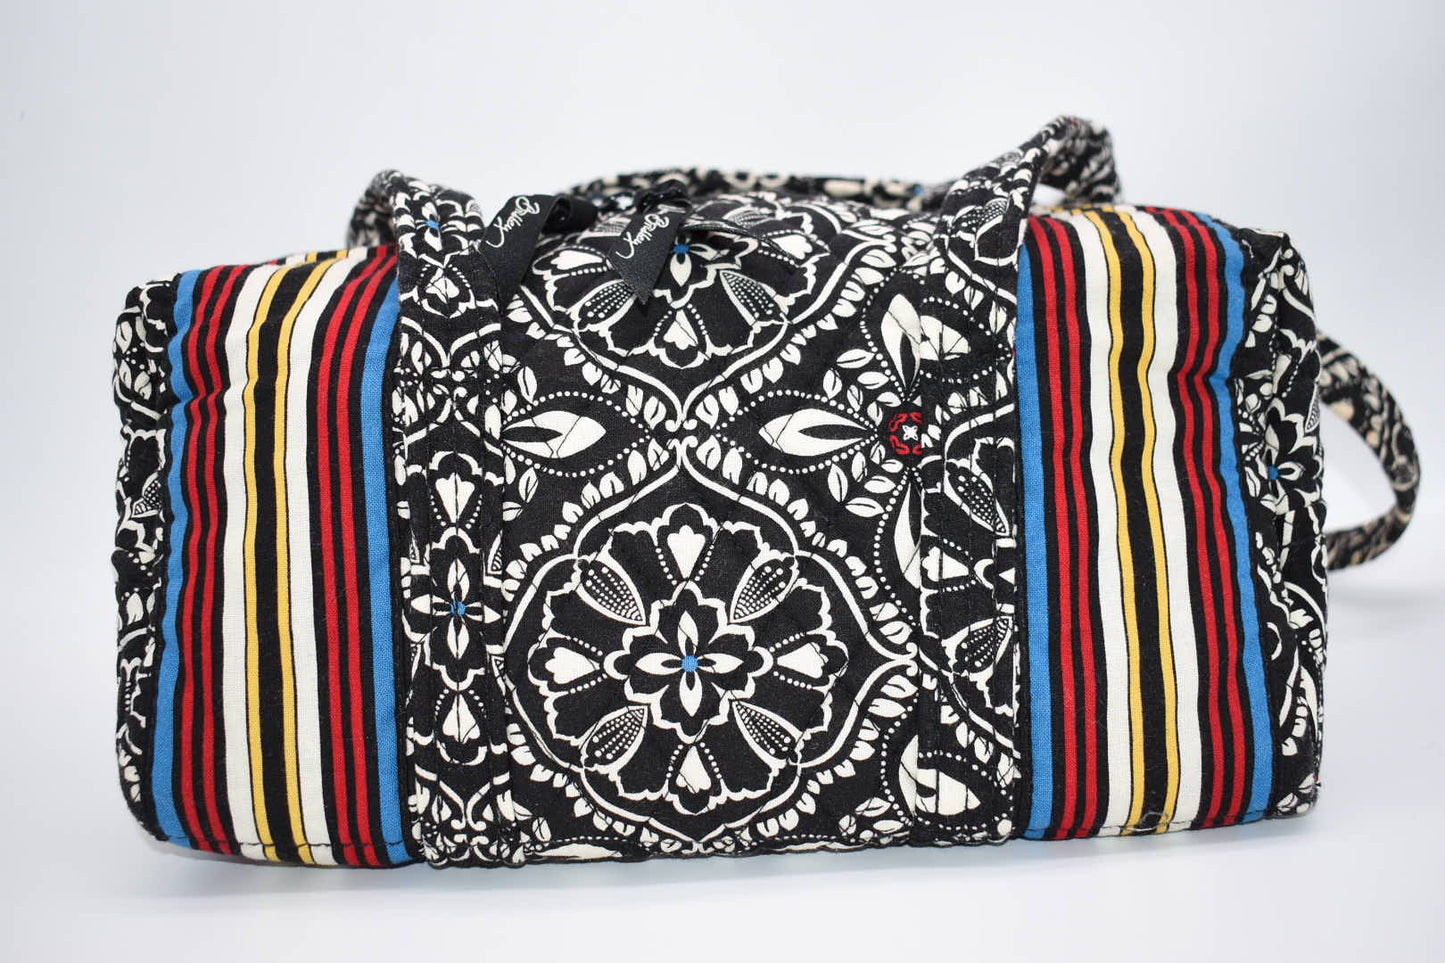 Vera Bradley 100 Handbag/ Shoulder Bag in "Barcelona" Pattern